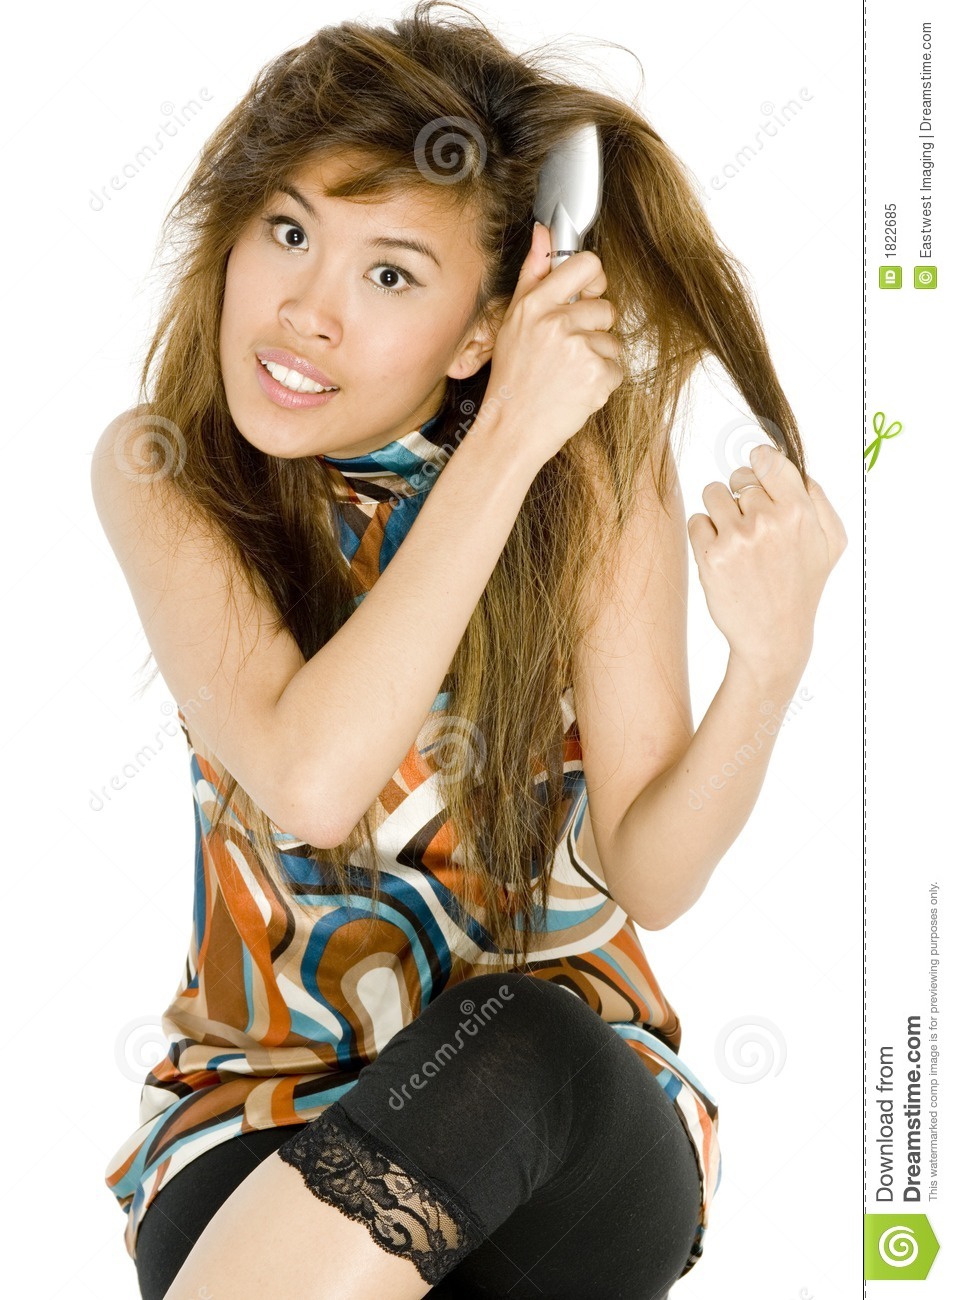 Tangled Hair Royalty Free Stock Photo   Image  1822685